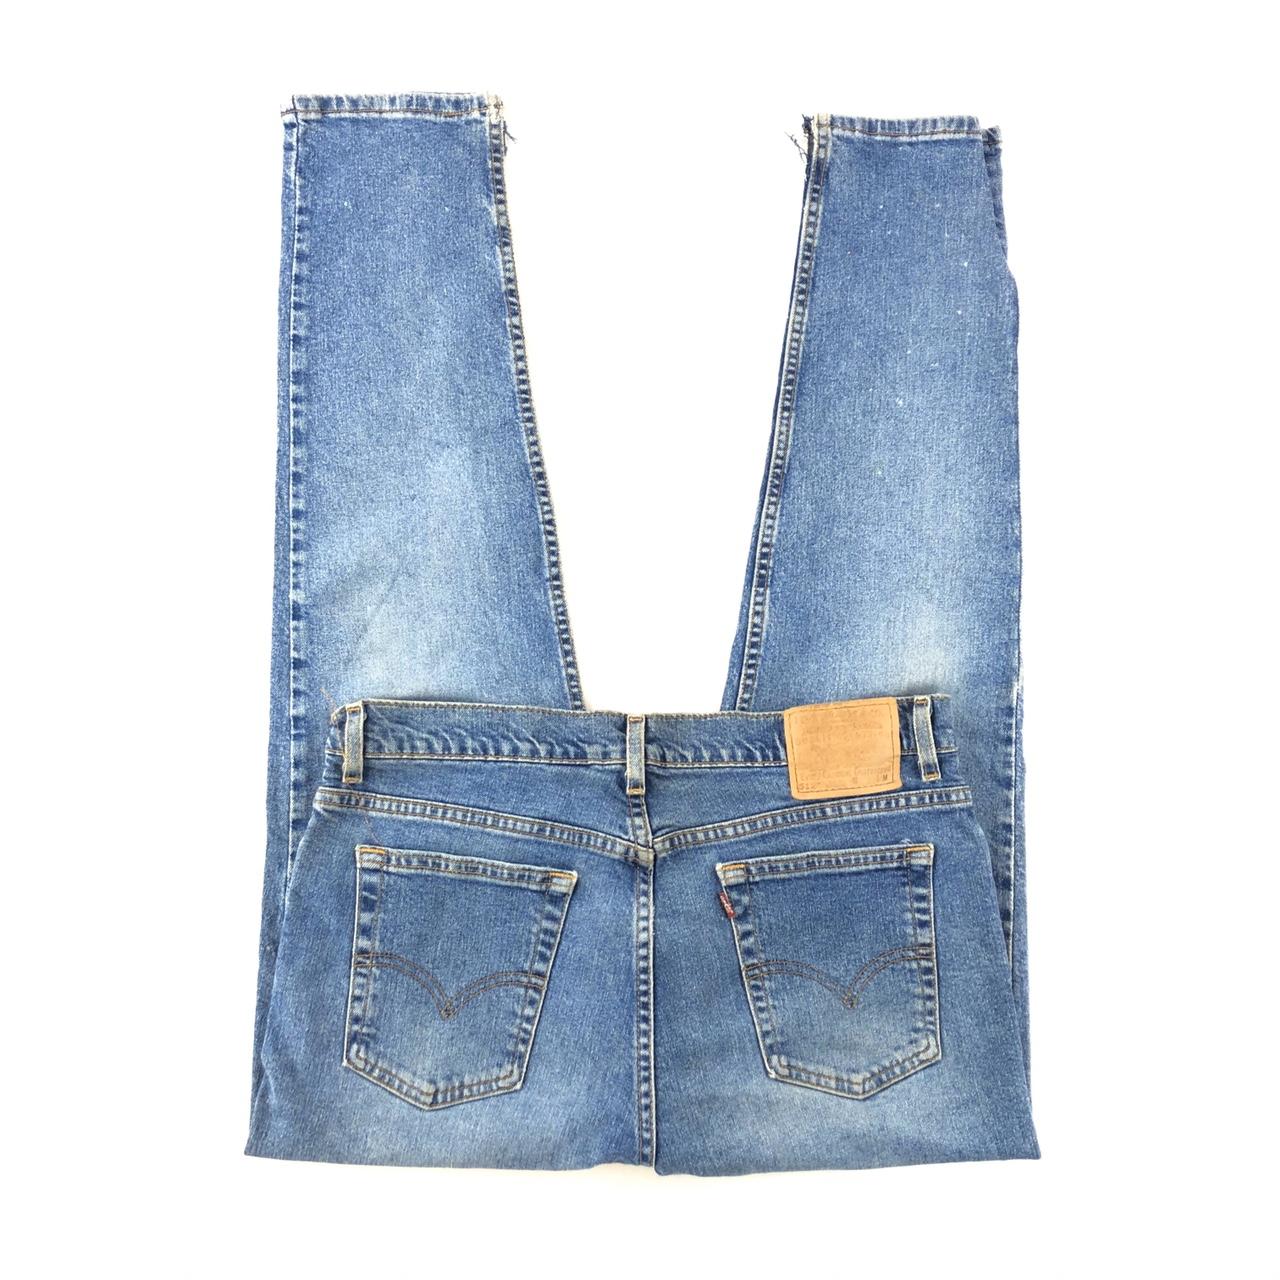 Vintage Levi’s 512 Tapered Leg Blue Jeans Women’s 16... - Depop